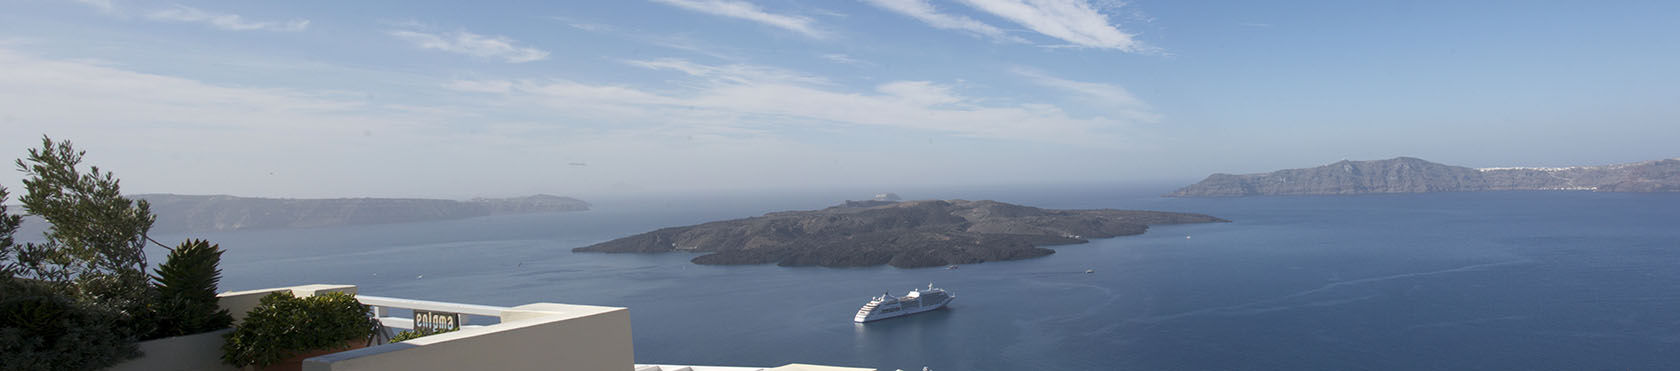 Caldera_Panorama #Caldera #Santorini #Greece #VisitGreece @GingerandNutmeg